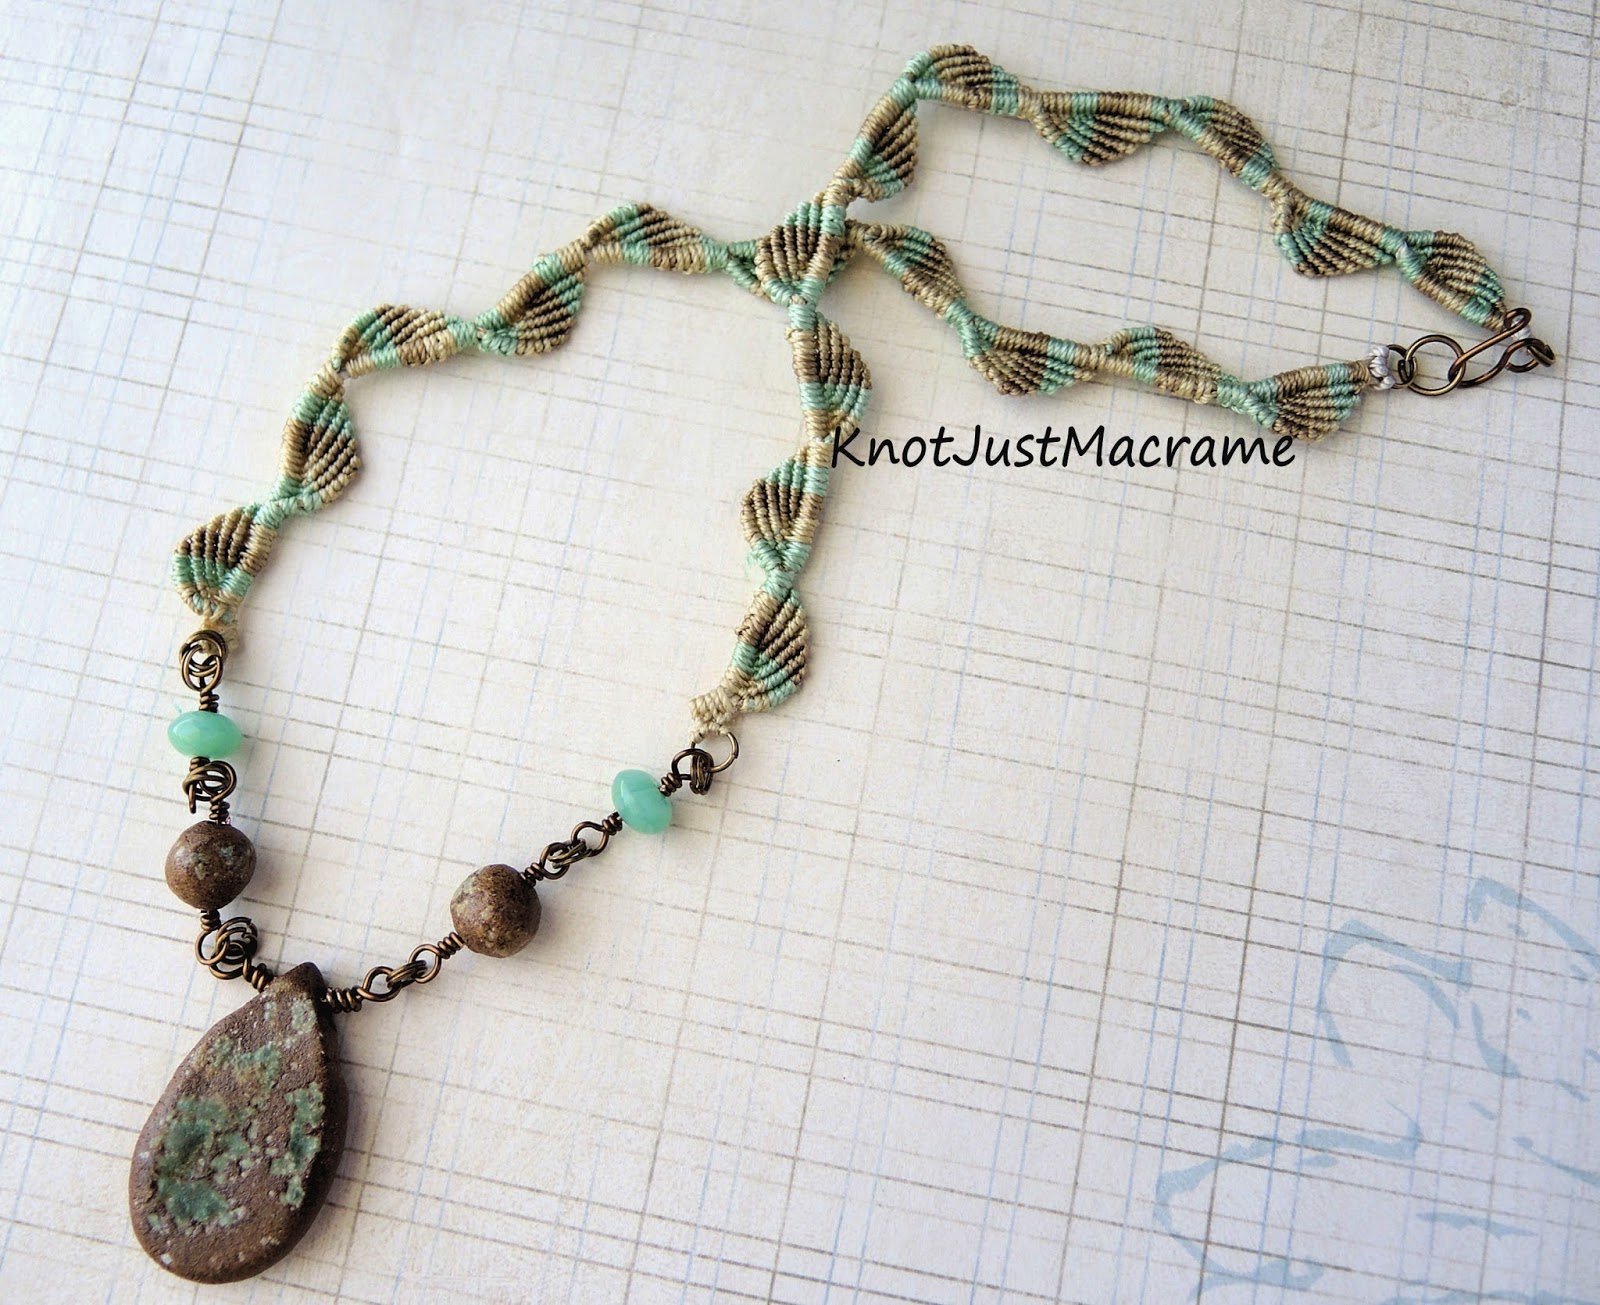 Micro macrame necklace by Sherri Stokey of Knot Just Macrame.